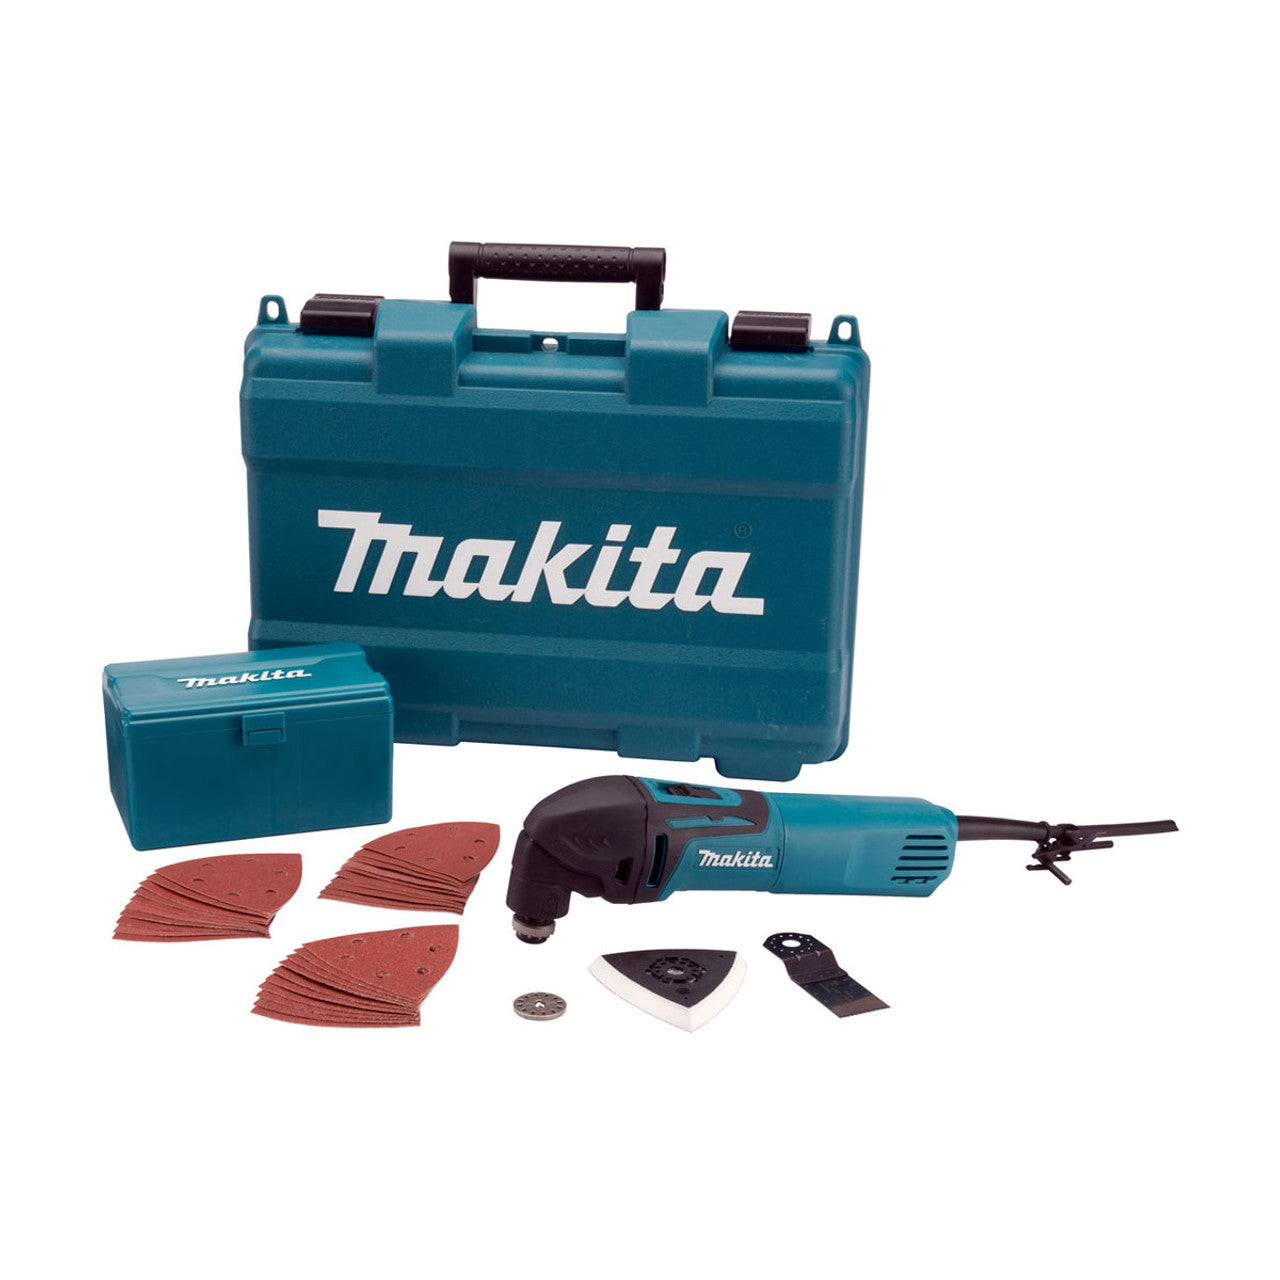 Makita TM3000CX4/2 240V Multi Tool with Accessories